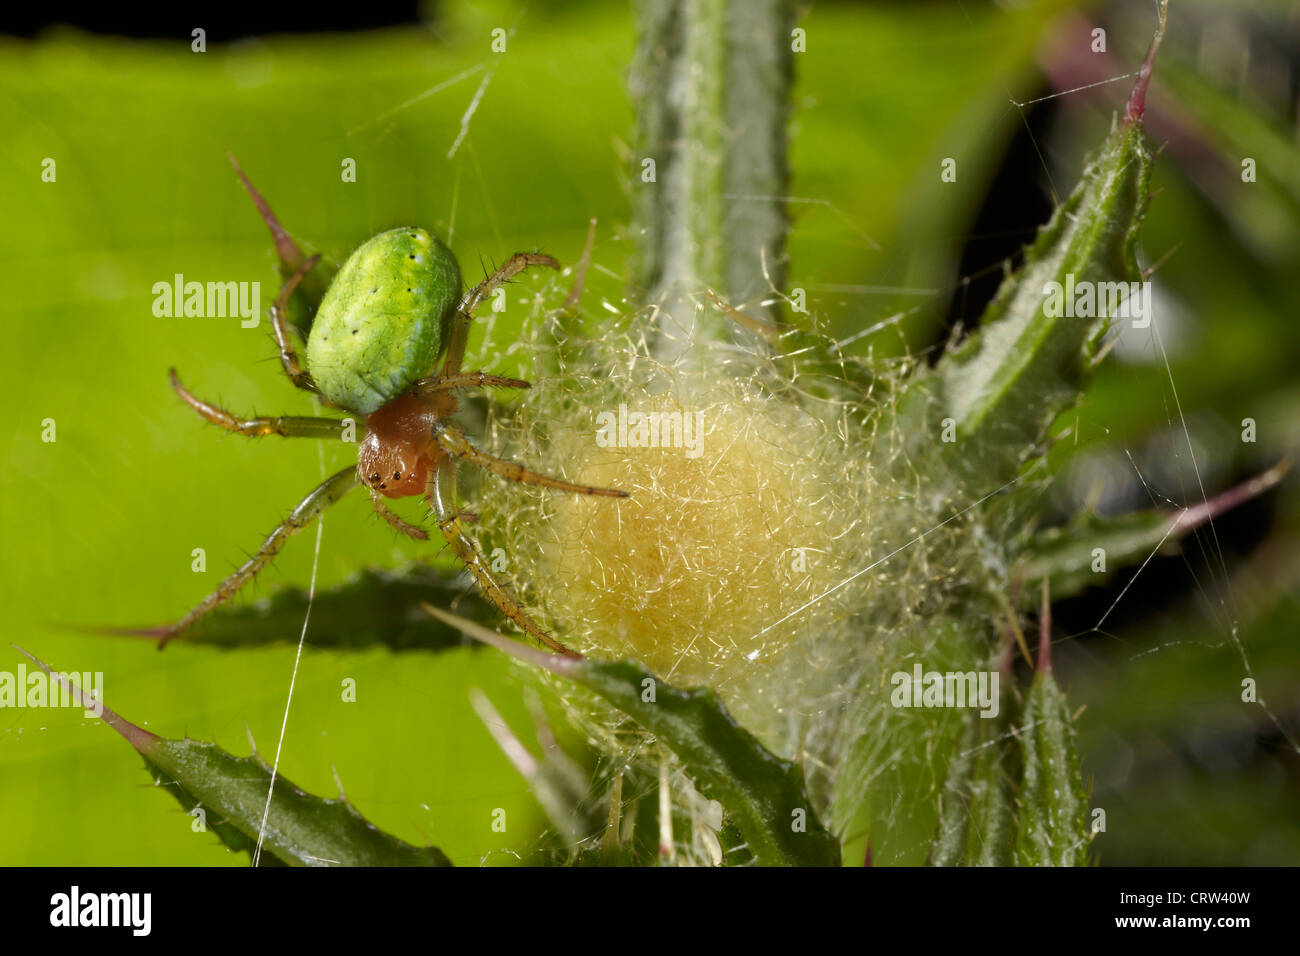 Cucumber spider, Araniella cucurbitina or Green Orb Weaver, with its egg case, UK Stock Photo